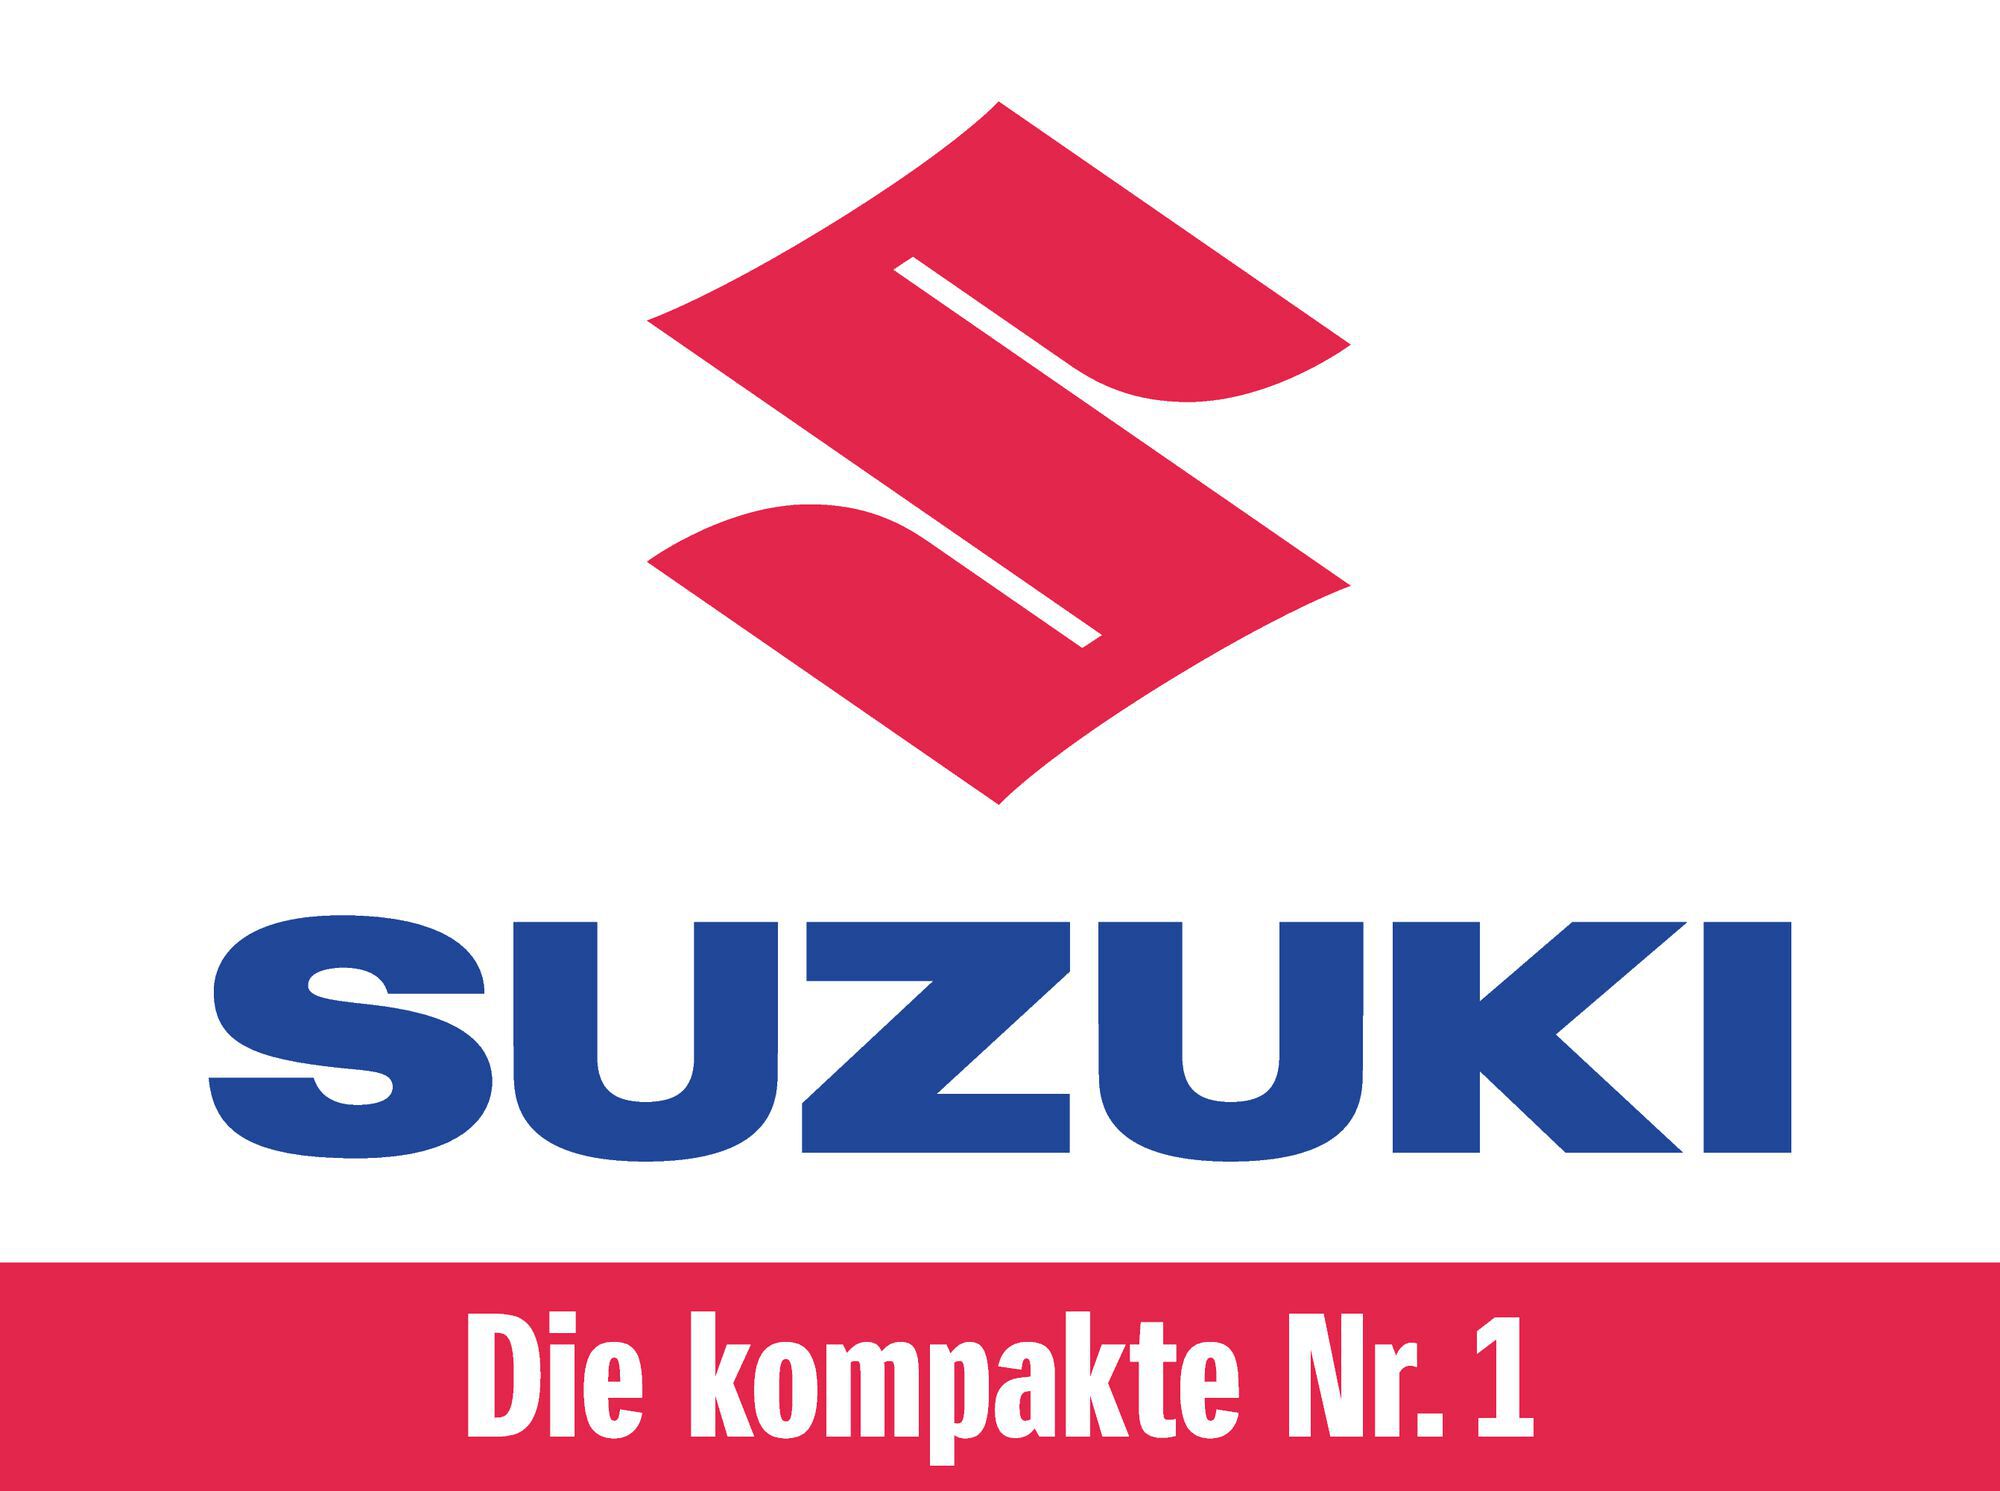 SUZUKI_Logo_2021_Vertikal_Box_d_CMYK.ai_LowRes_JPG.jpg